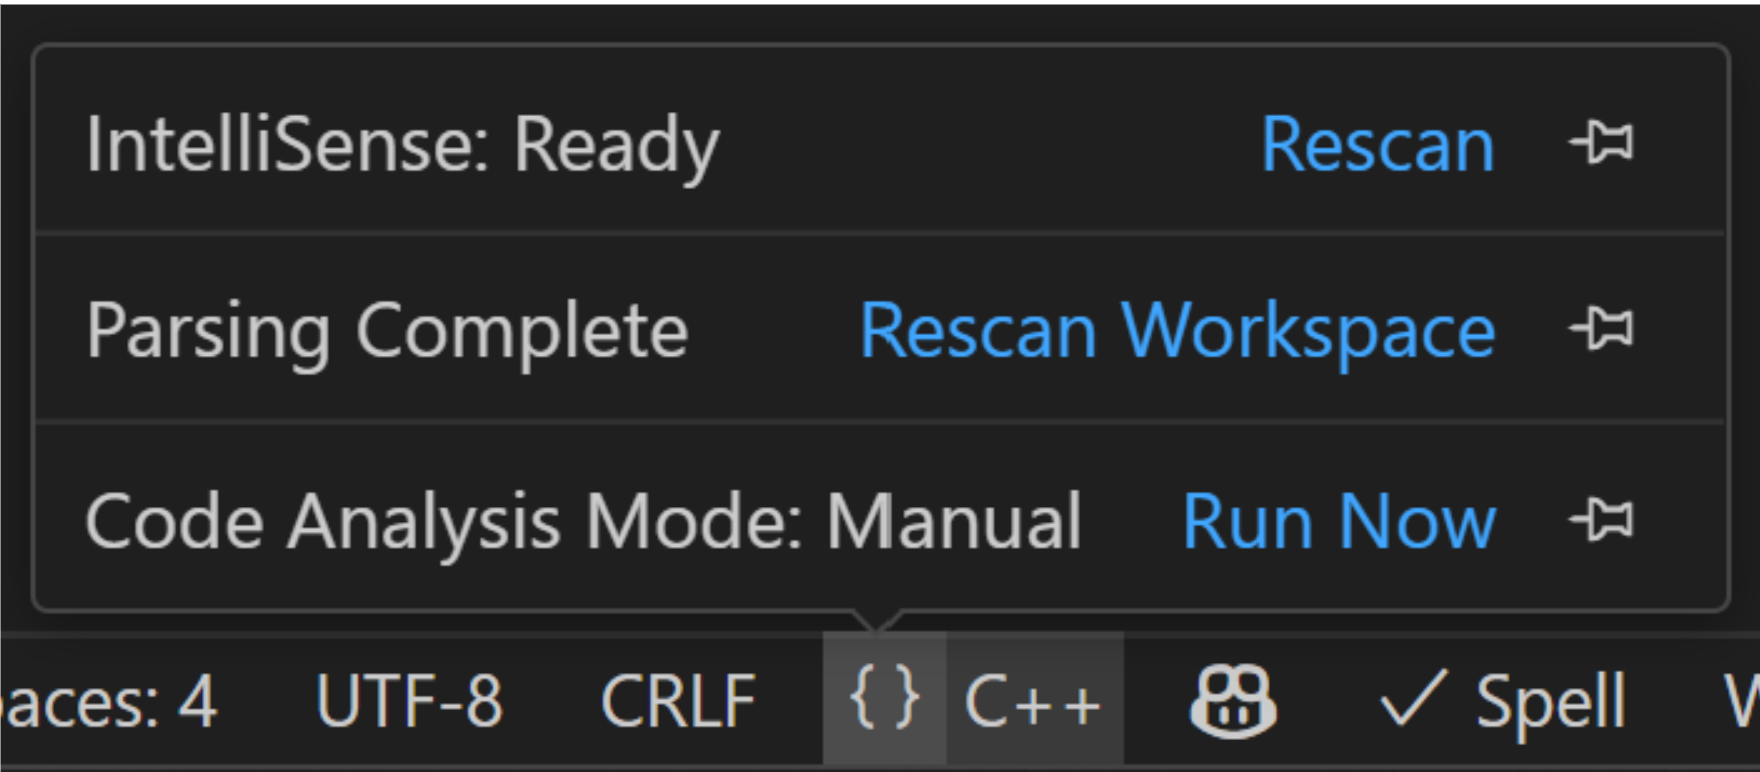 C++ 扩展语言状态栏弹出按钮